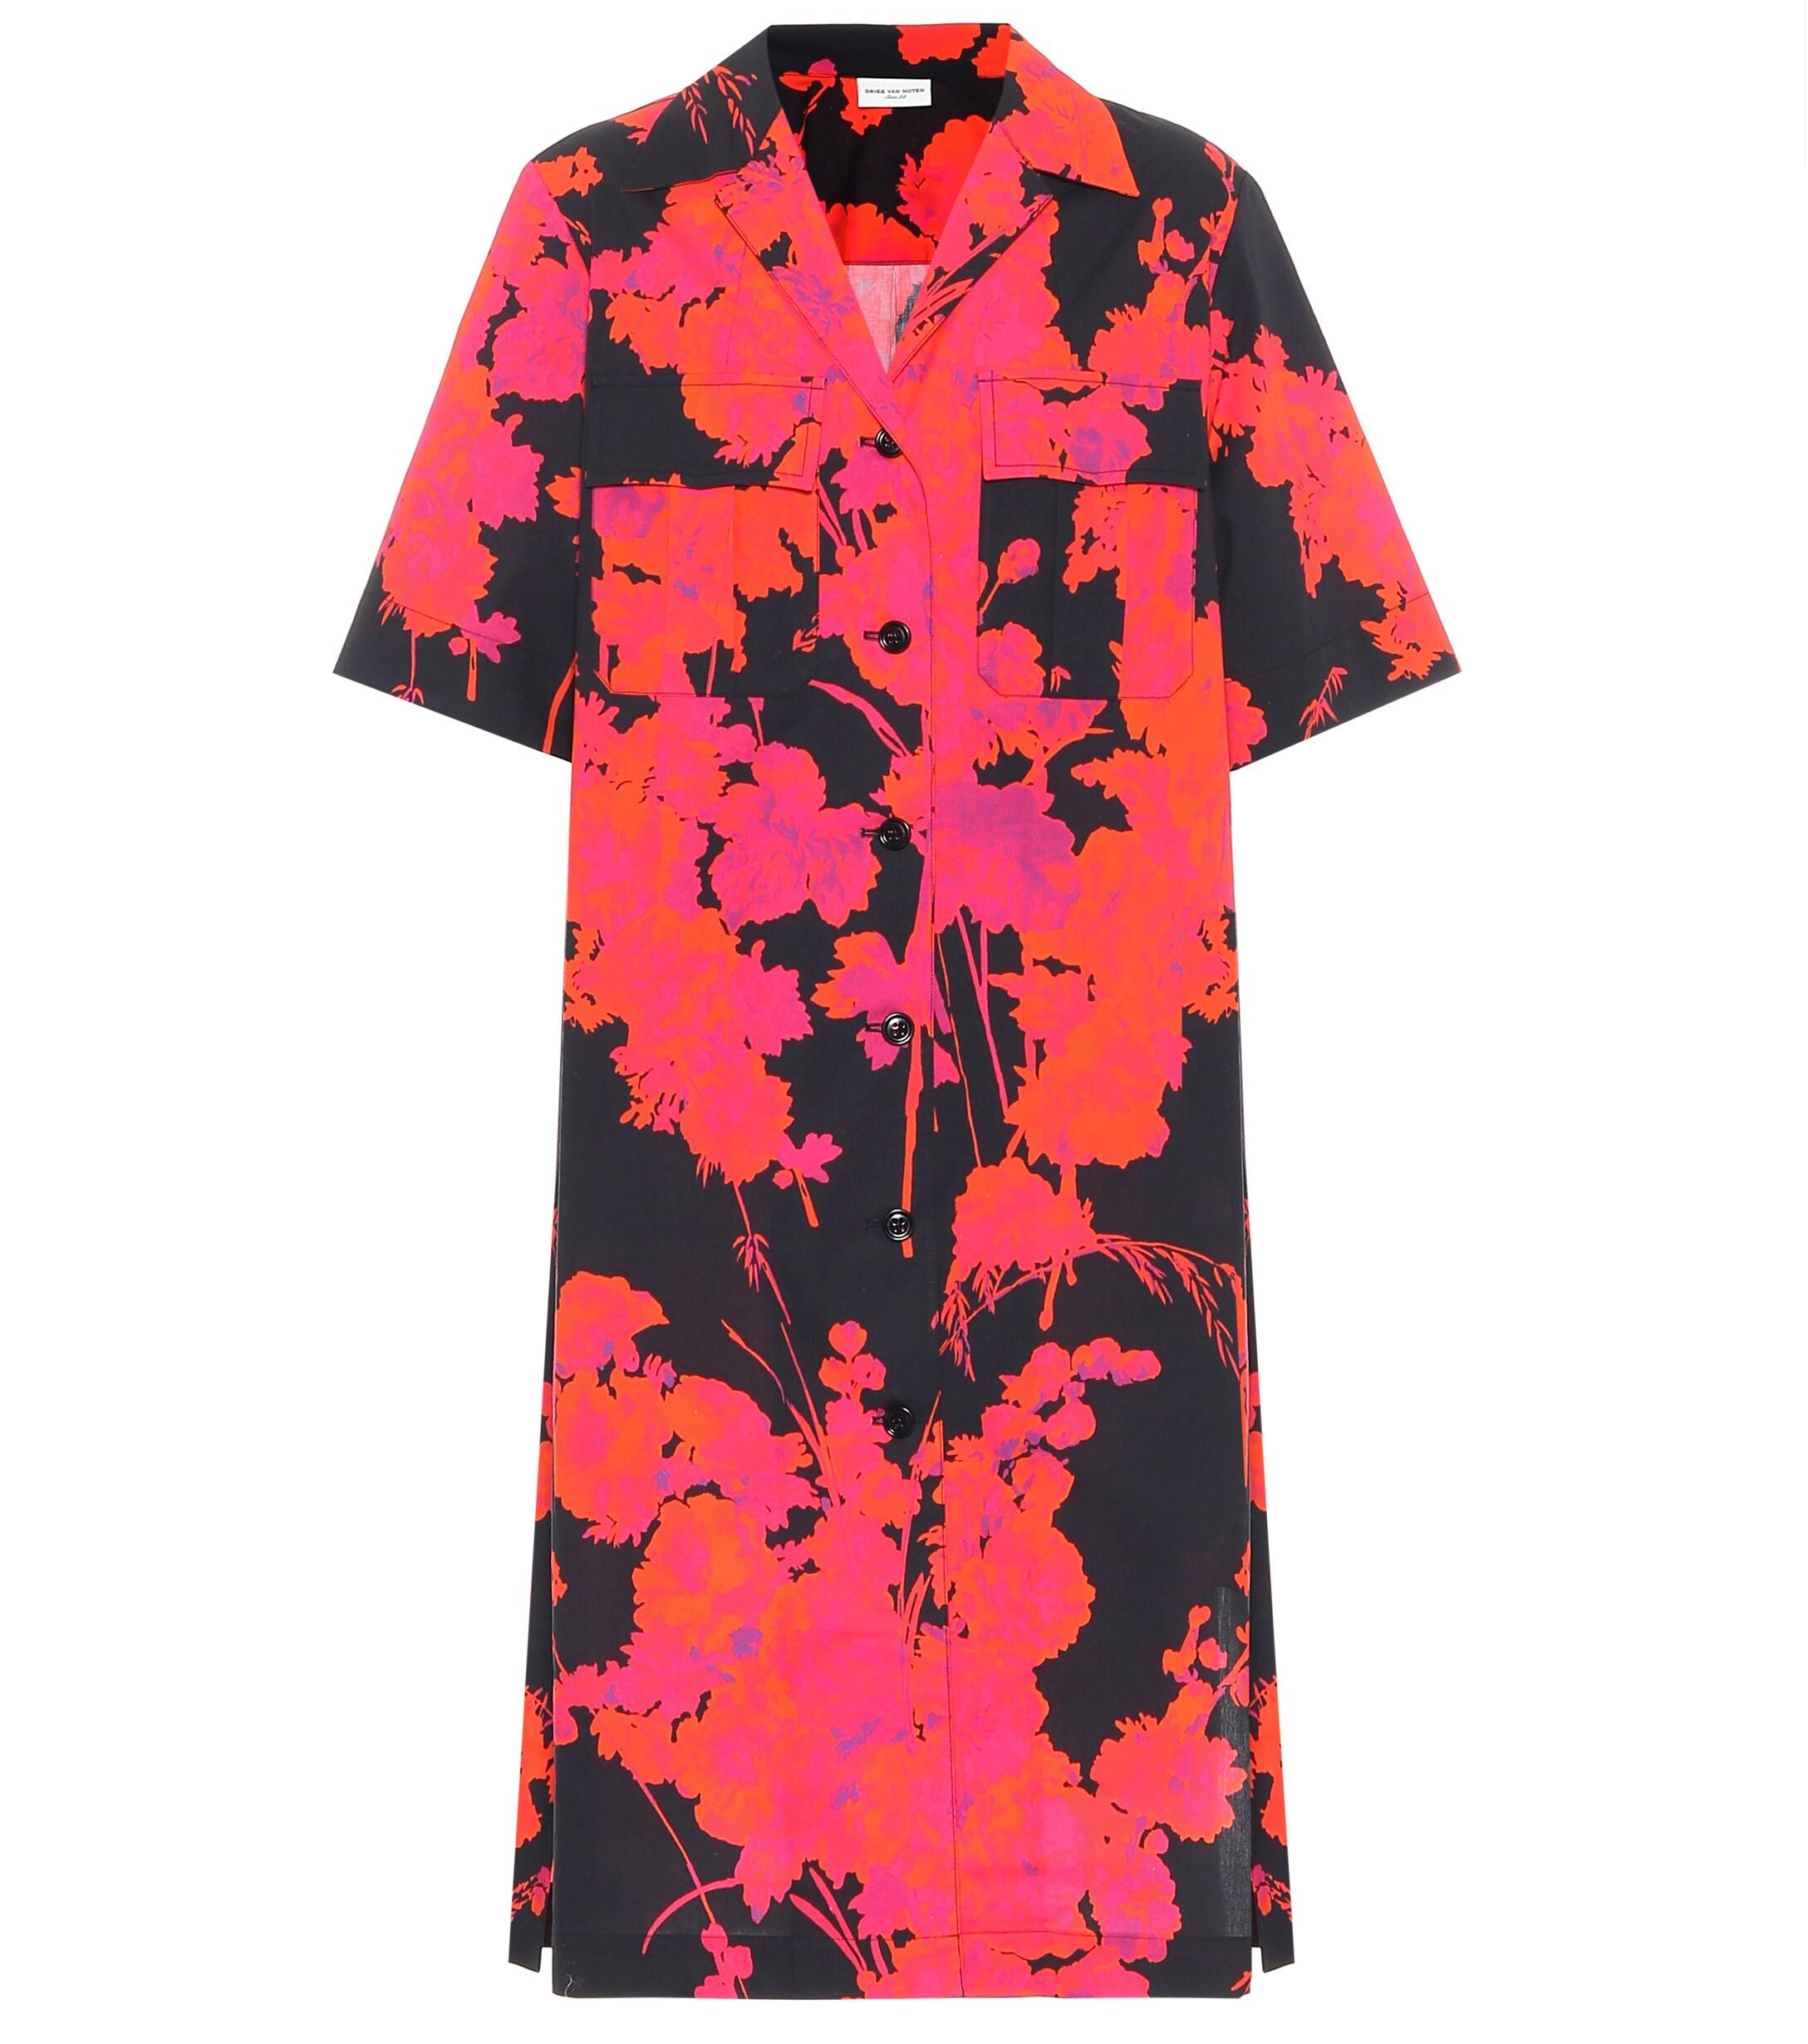 Dries Van Noten Floral Cotton Shirt Dress in Red - Lyst